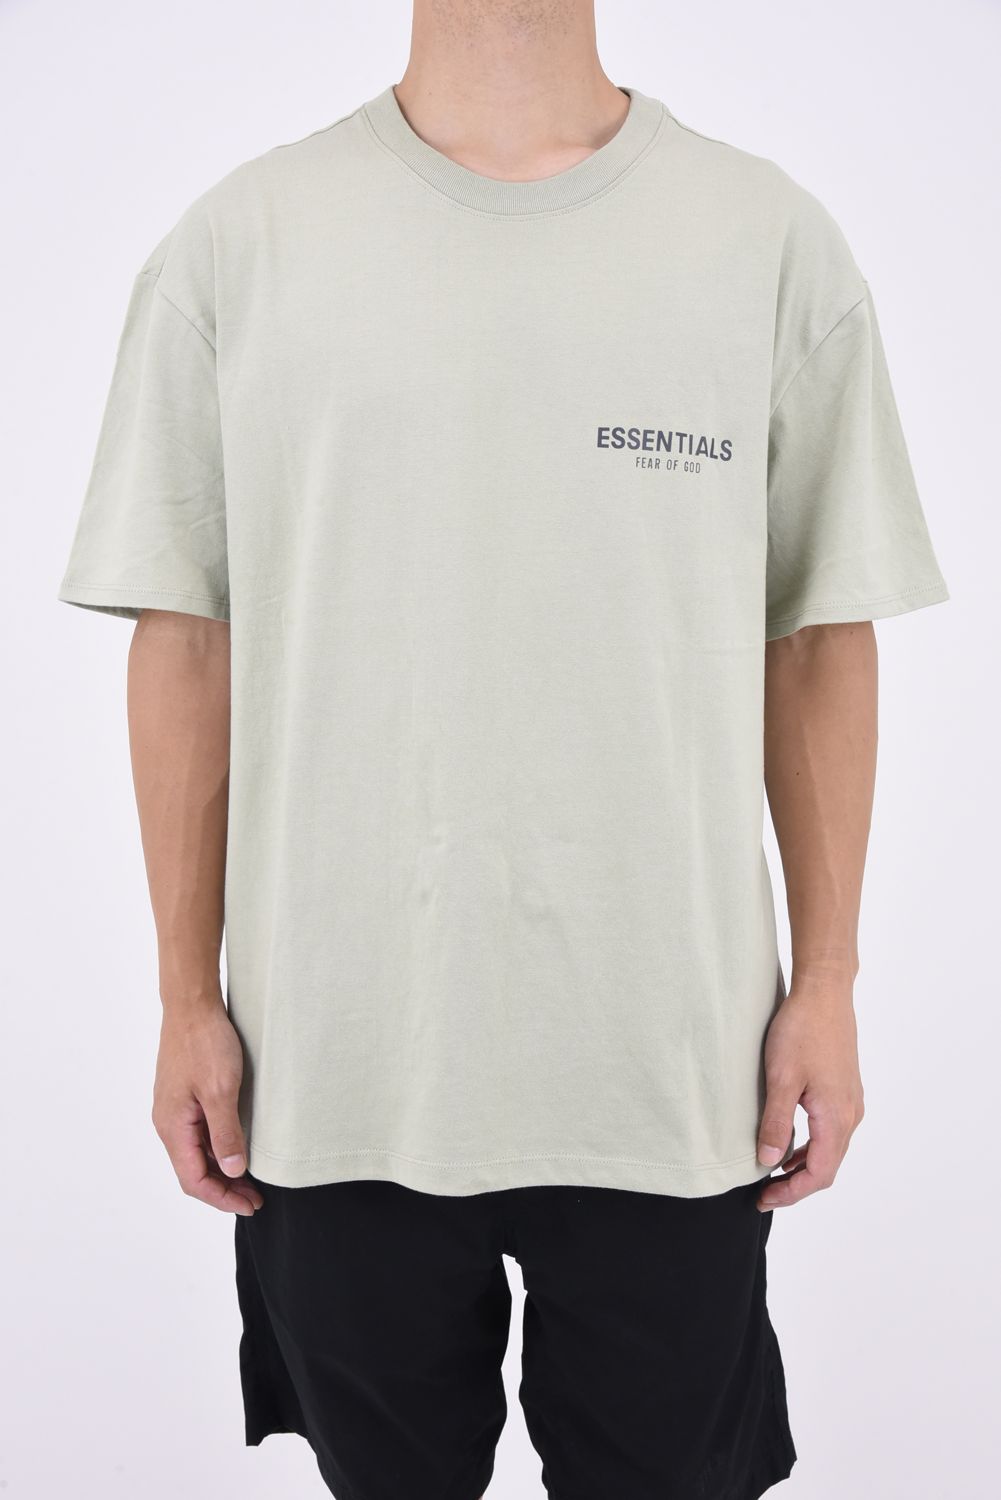 FOG ESSENTIALS - ESSENTIALS ONE POINT LOGO T-Shirt / ワン